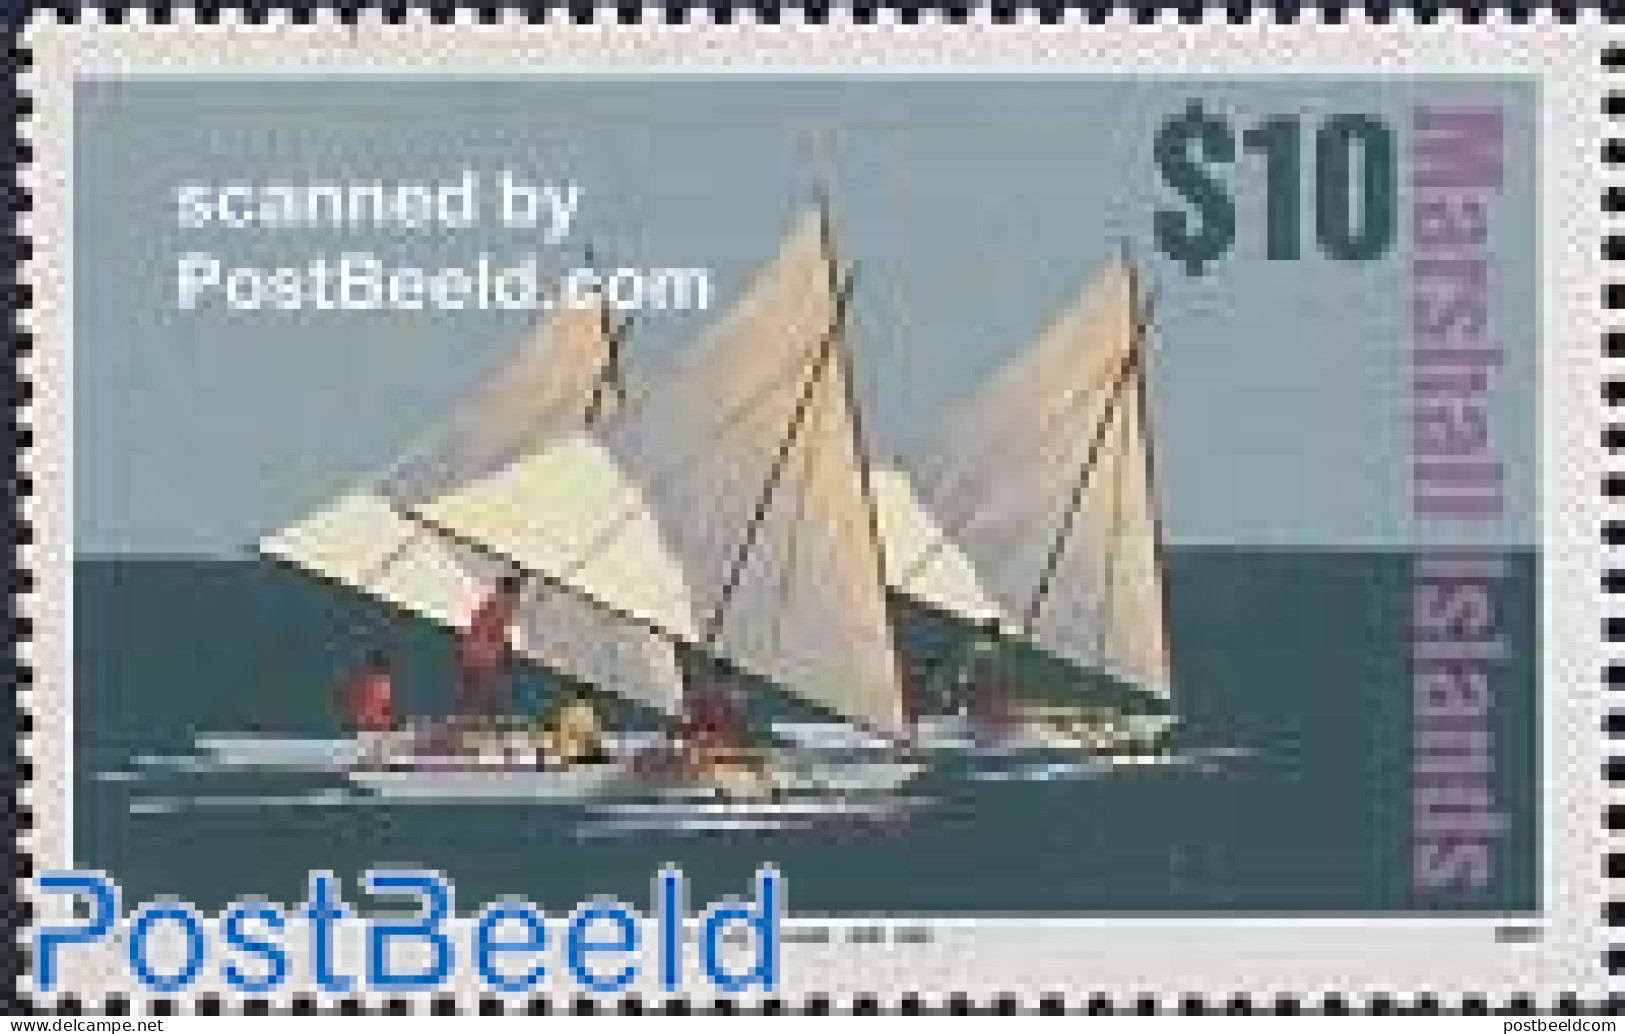 Marshall Islands 1994 Definitive, Boat 1v, Mint NH, Sport - Transport - Kayaks & Rowing - Ships And Boats - Aviron